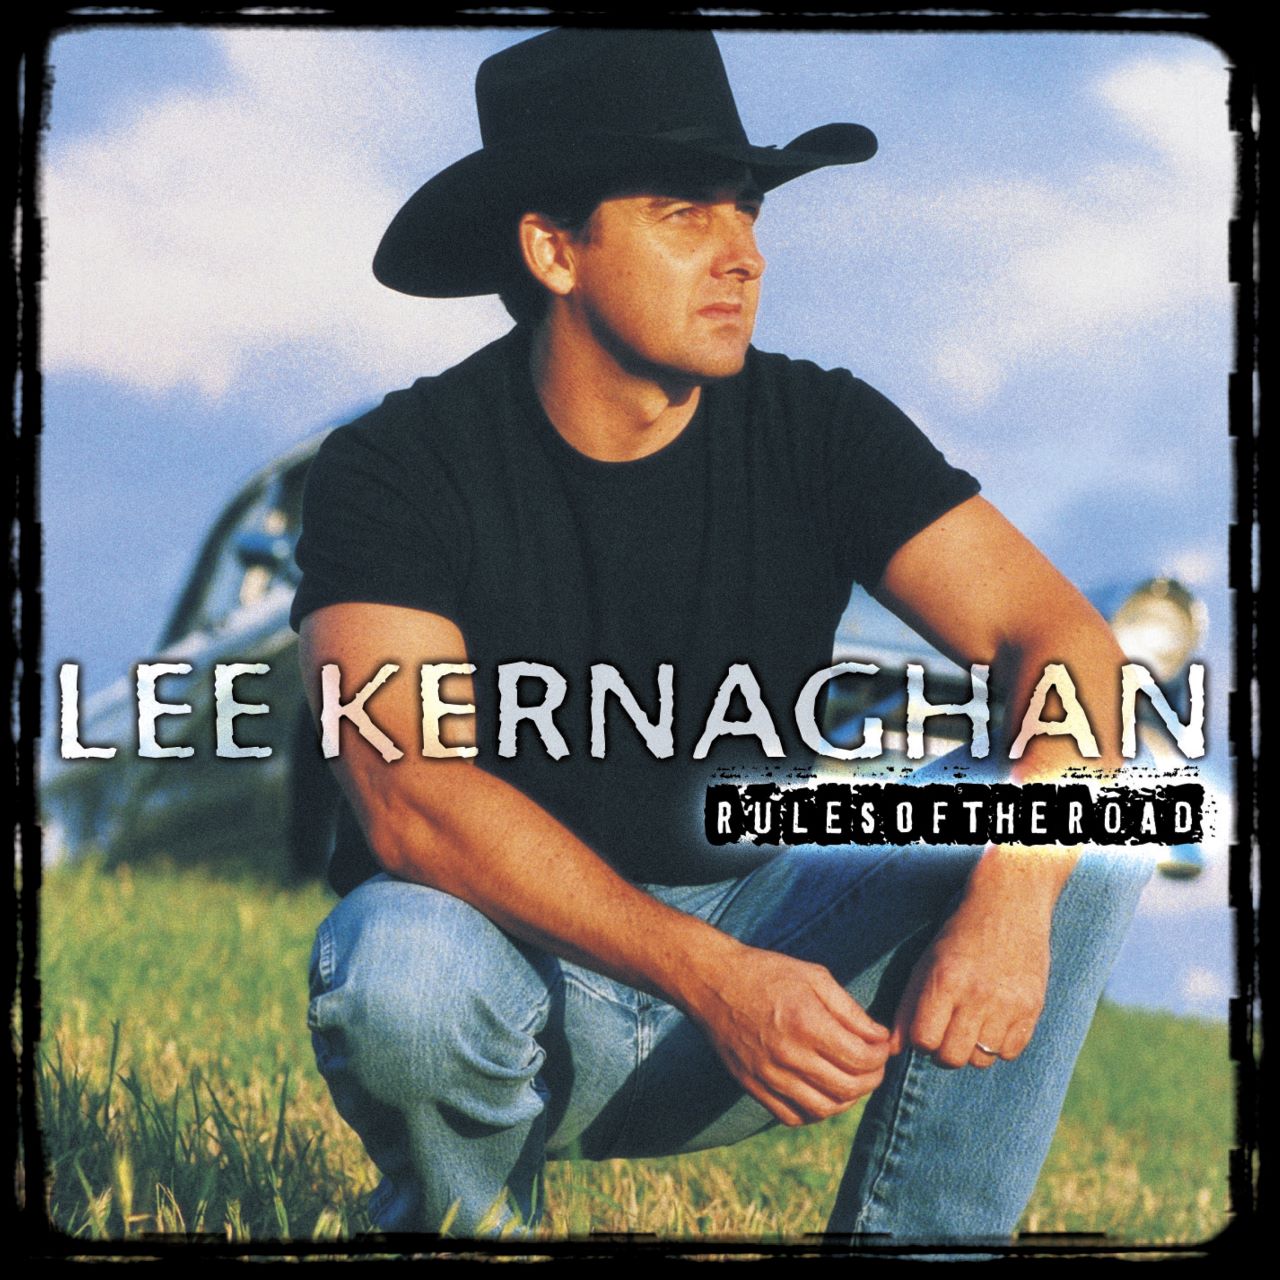 Lee Kernaghan - Rules Of The Road cover album